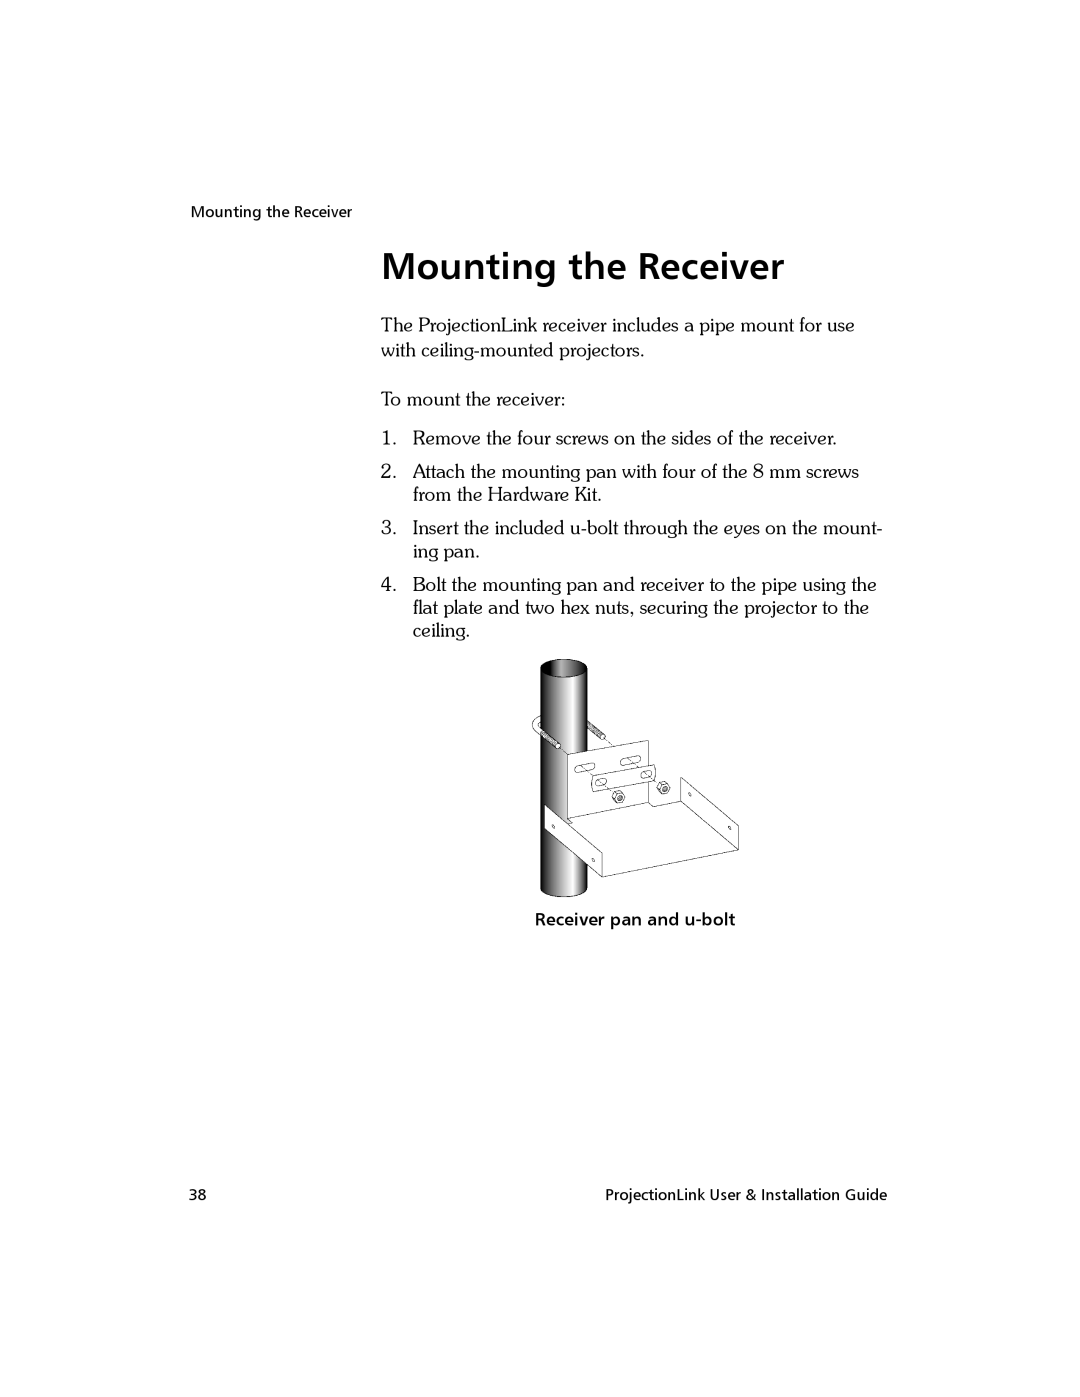 Proxima ASA BNDL-001, PL-300E manual Mounting the Receiver 